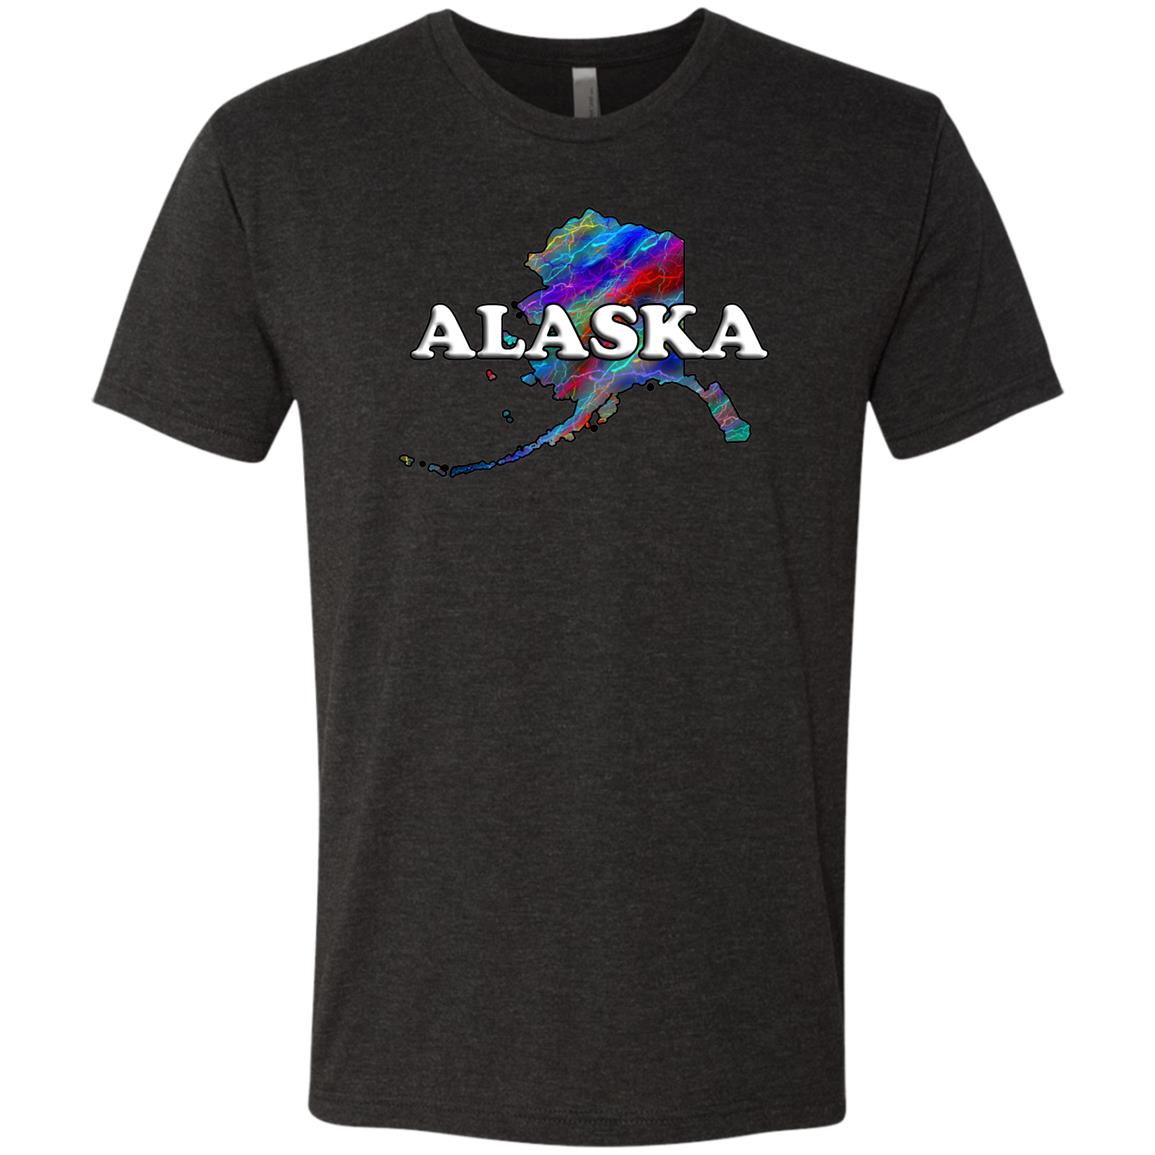 Alaska State T-Shirt